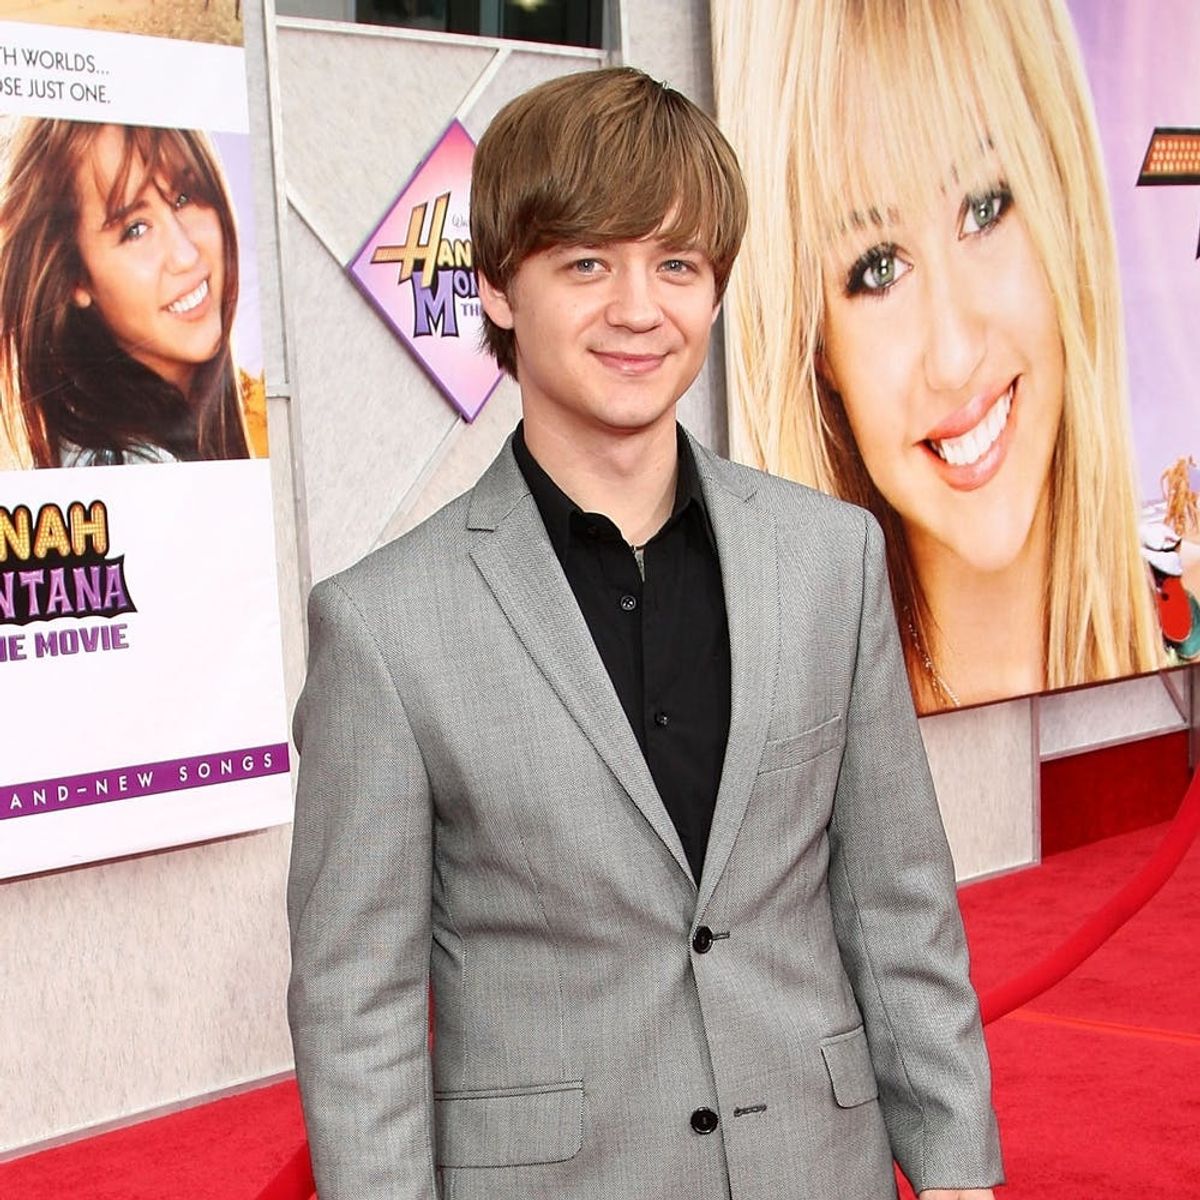 Hannah Montana Actor Jason Earles’ Wedding Was a Disney Channel Reunion